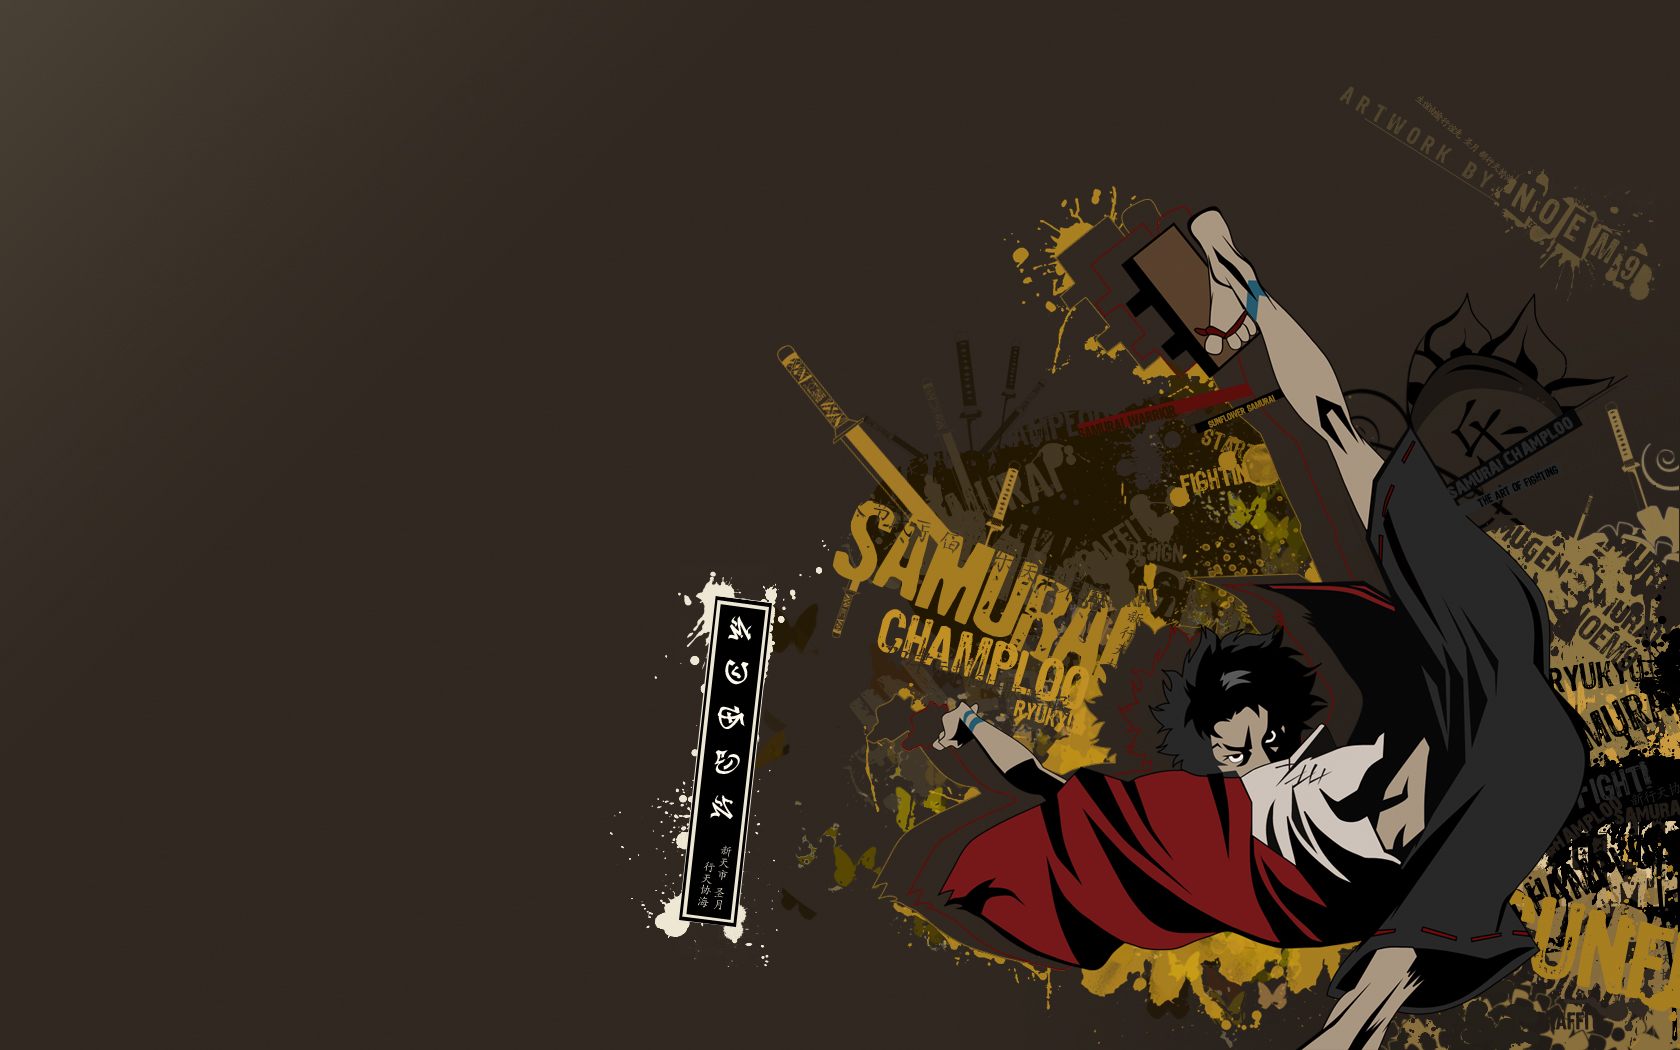 Anime-inspired artwork featuring a dynamic samurai duel from Samurai Champloo.